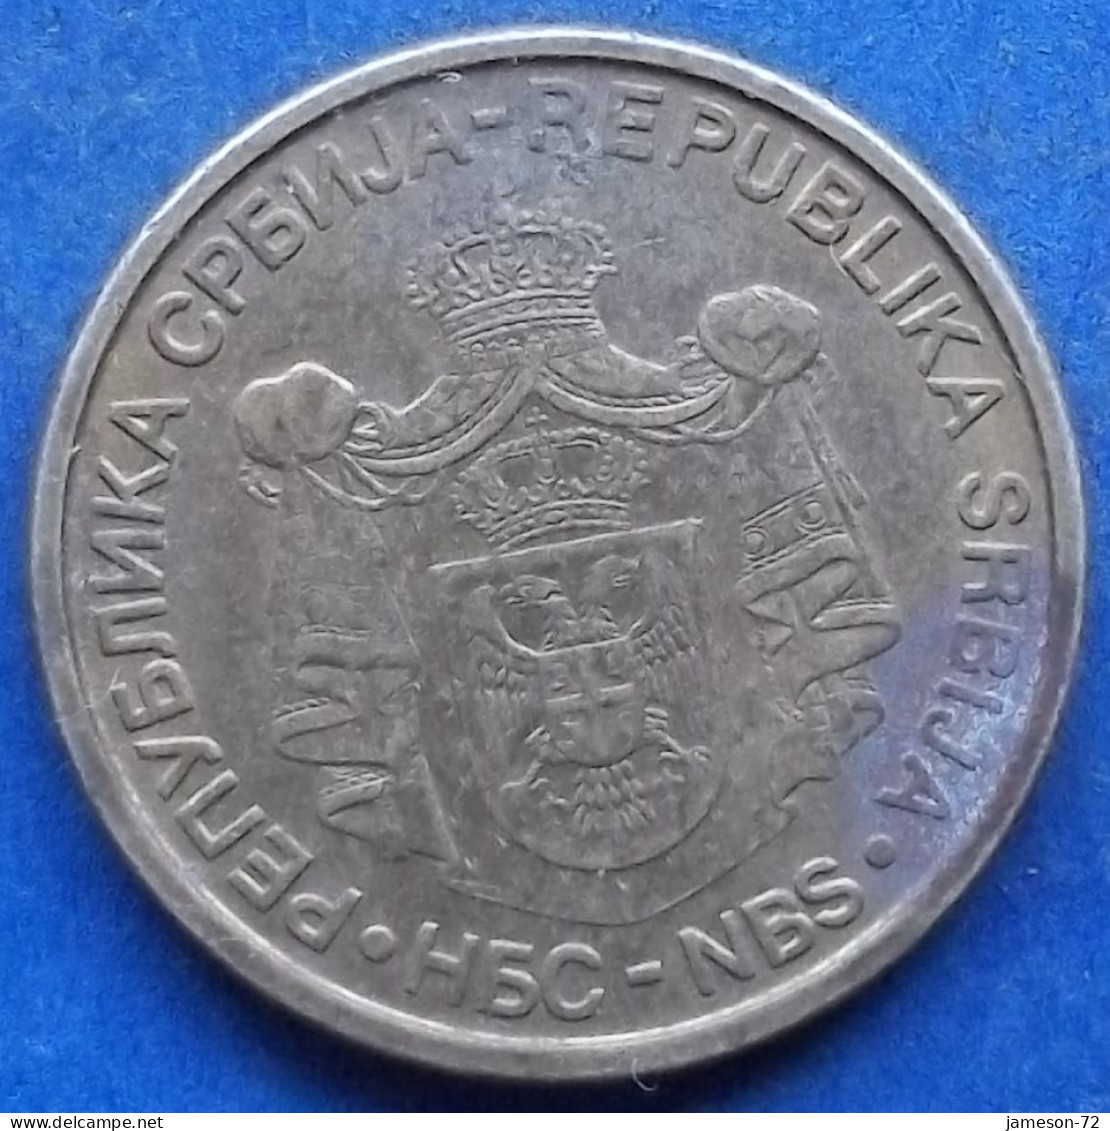 SERBIA - 1 Dinar 2006 "National Bank" KM# 39 Republic (2003) - Edelweiss Coins - Serbia